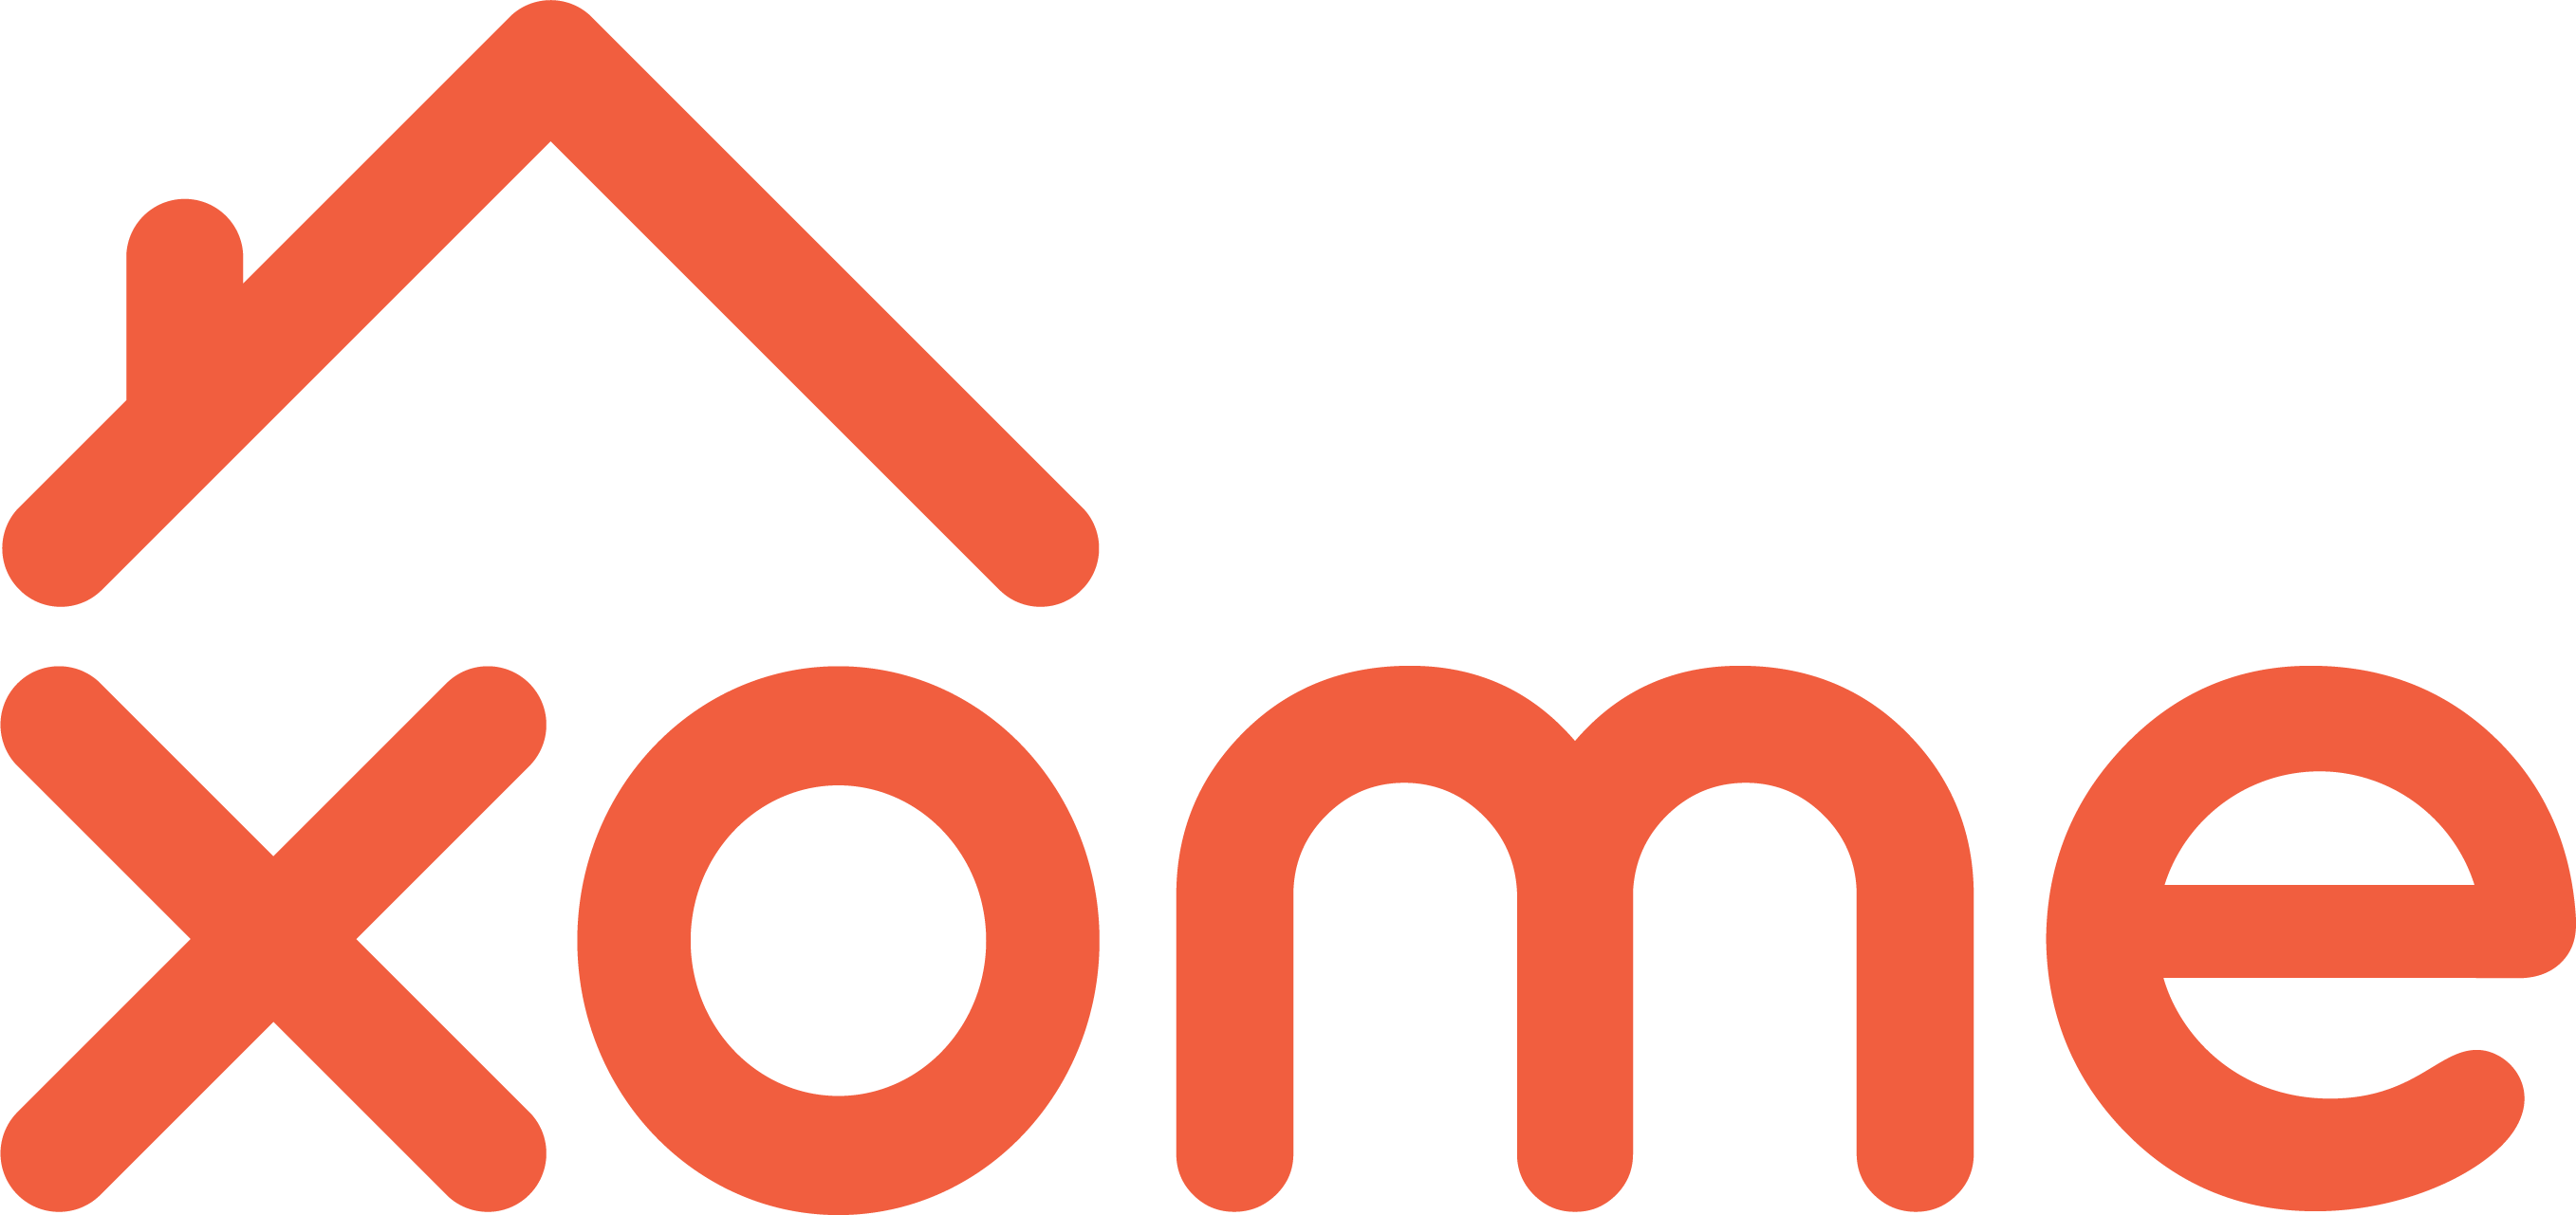 Xome_Logo 2020 (2) (1).png